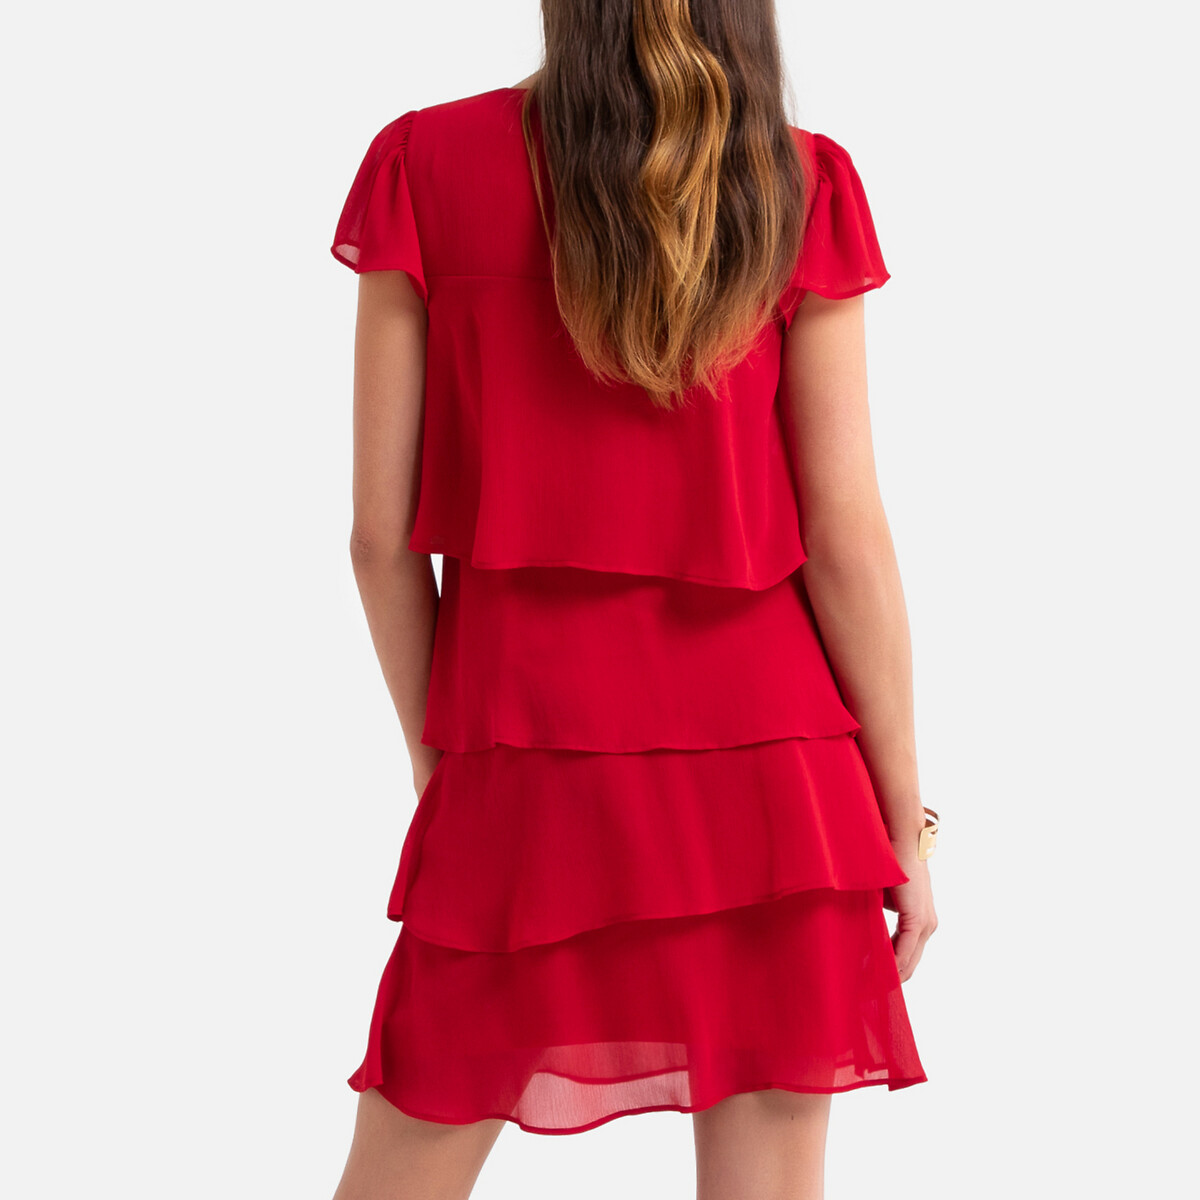 Платье La Redoute С воланом из жатого крепа 38 (FR) - 44 (RUS) красный, размер 38 (FR) - 44 (RUS) С воланом из жатого крепа 38 (FR) - 44 (RUS) красный - фото 4